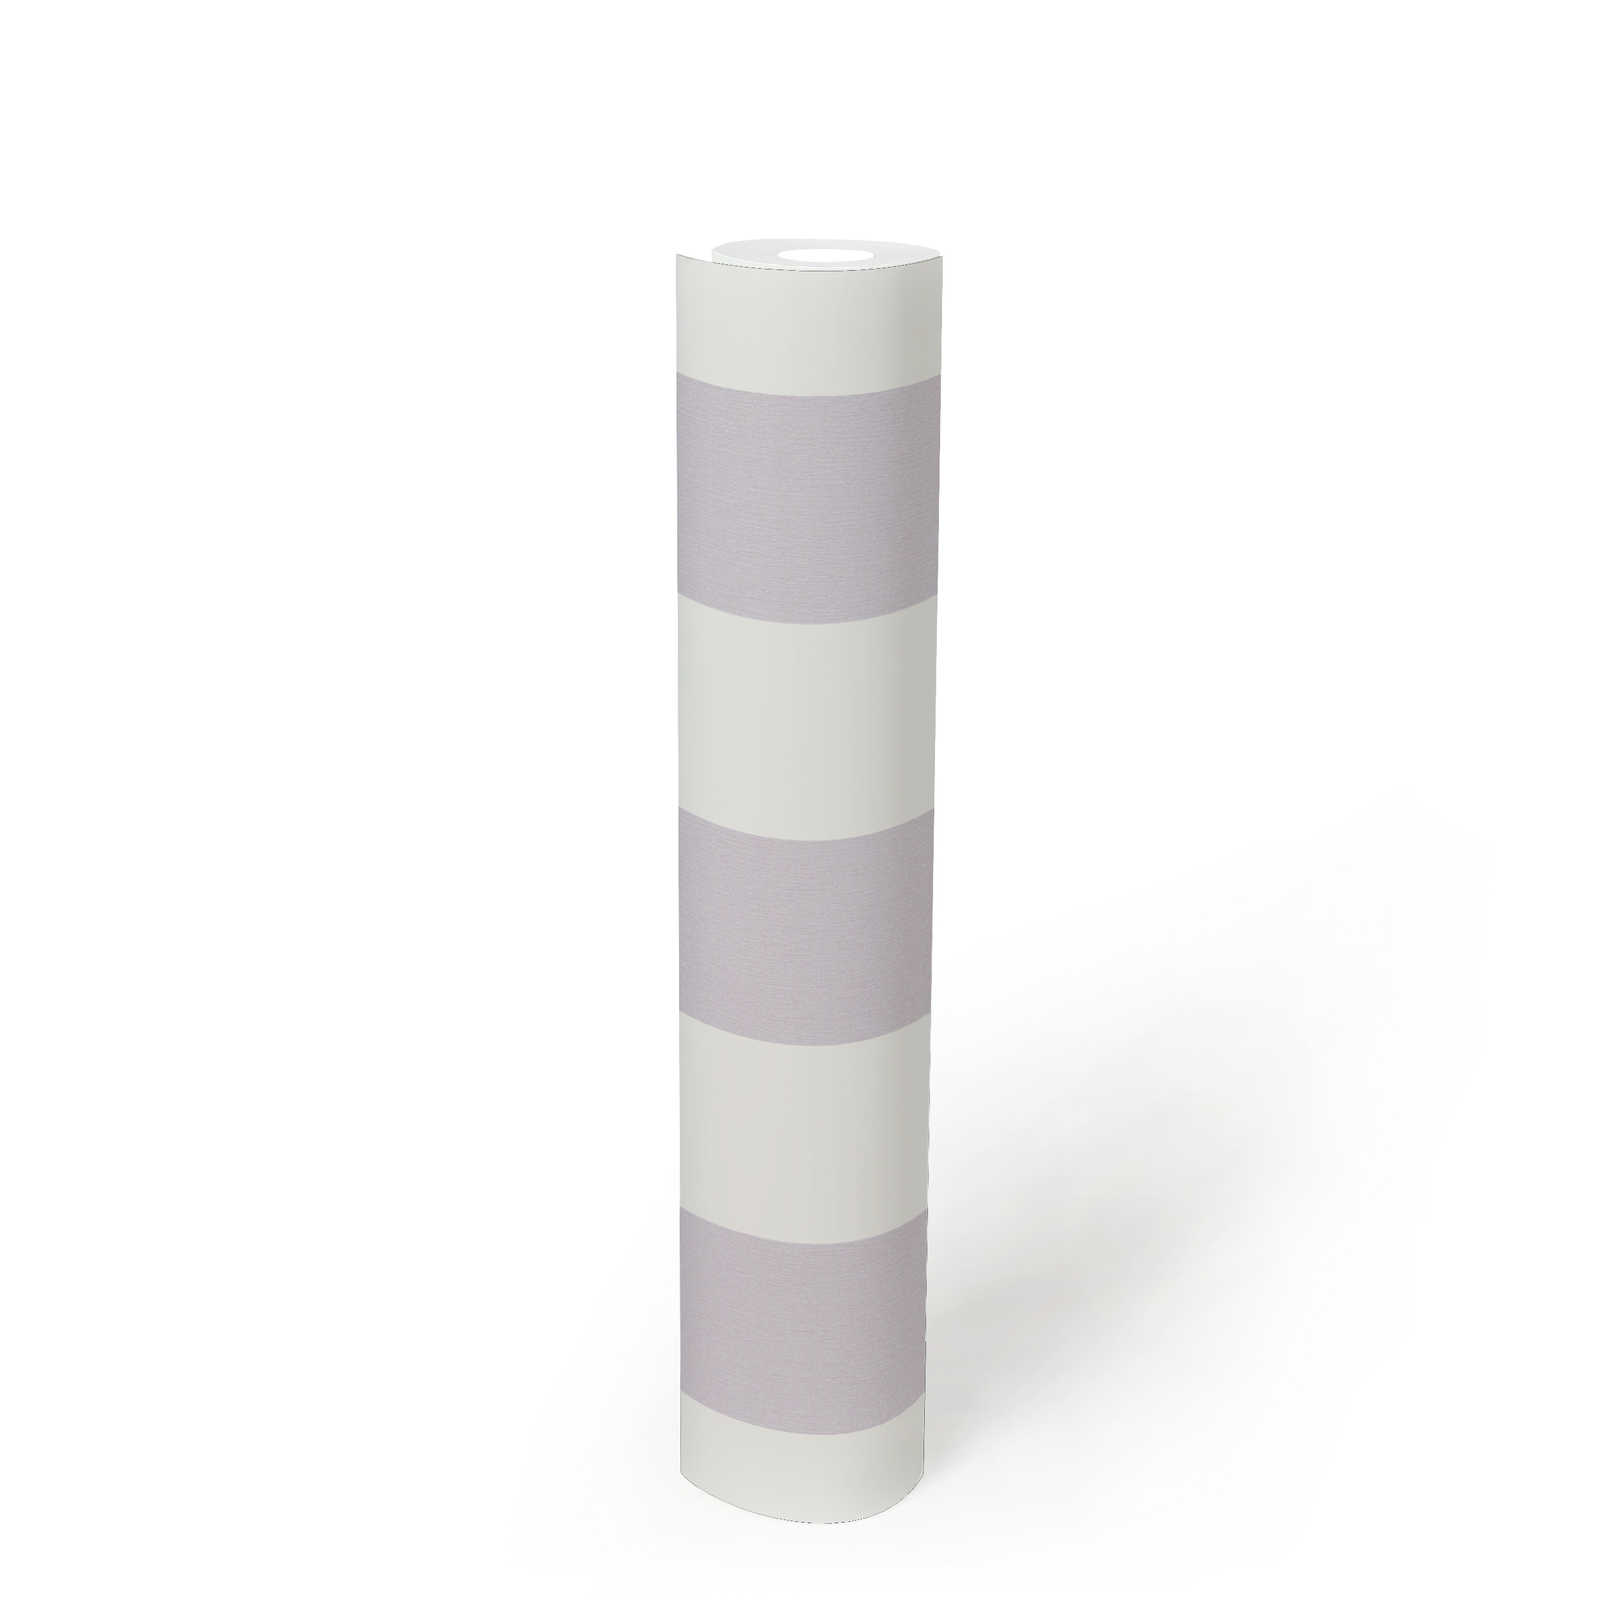             Nursery wallpaper vertical stripes - grey, white
        